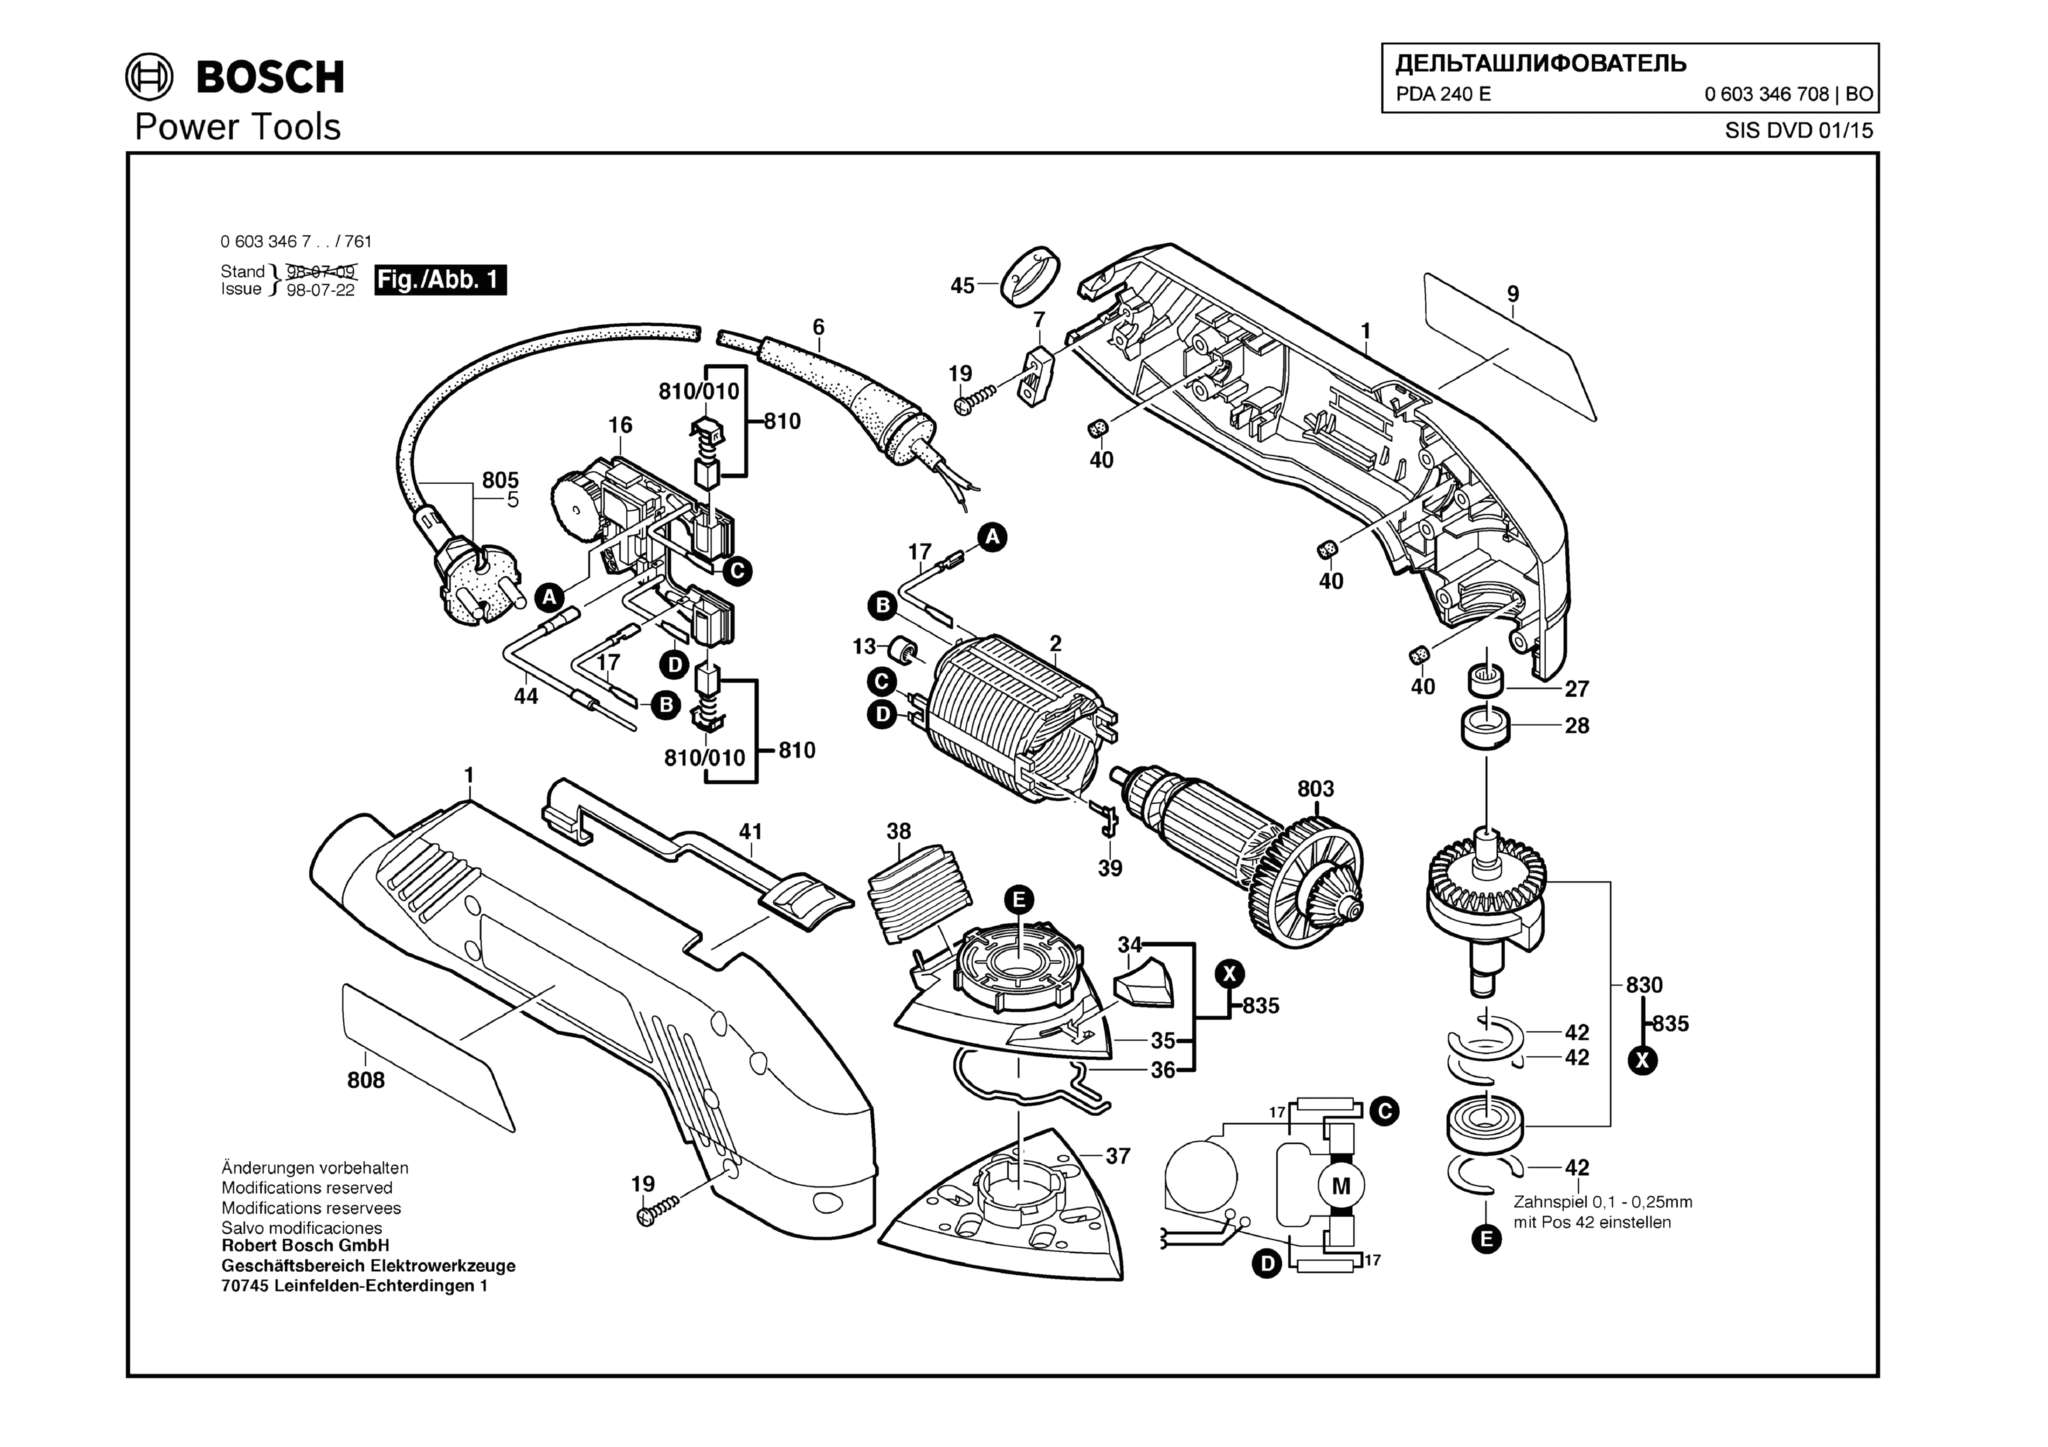 Запчасти, схема и деталировка Bosch PDA 240 E (ТИП 0603346708)